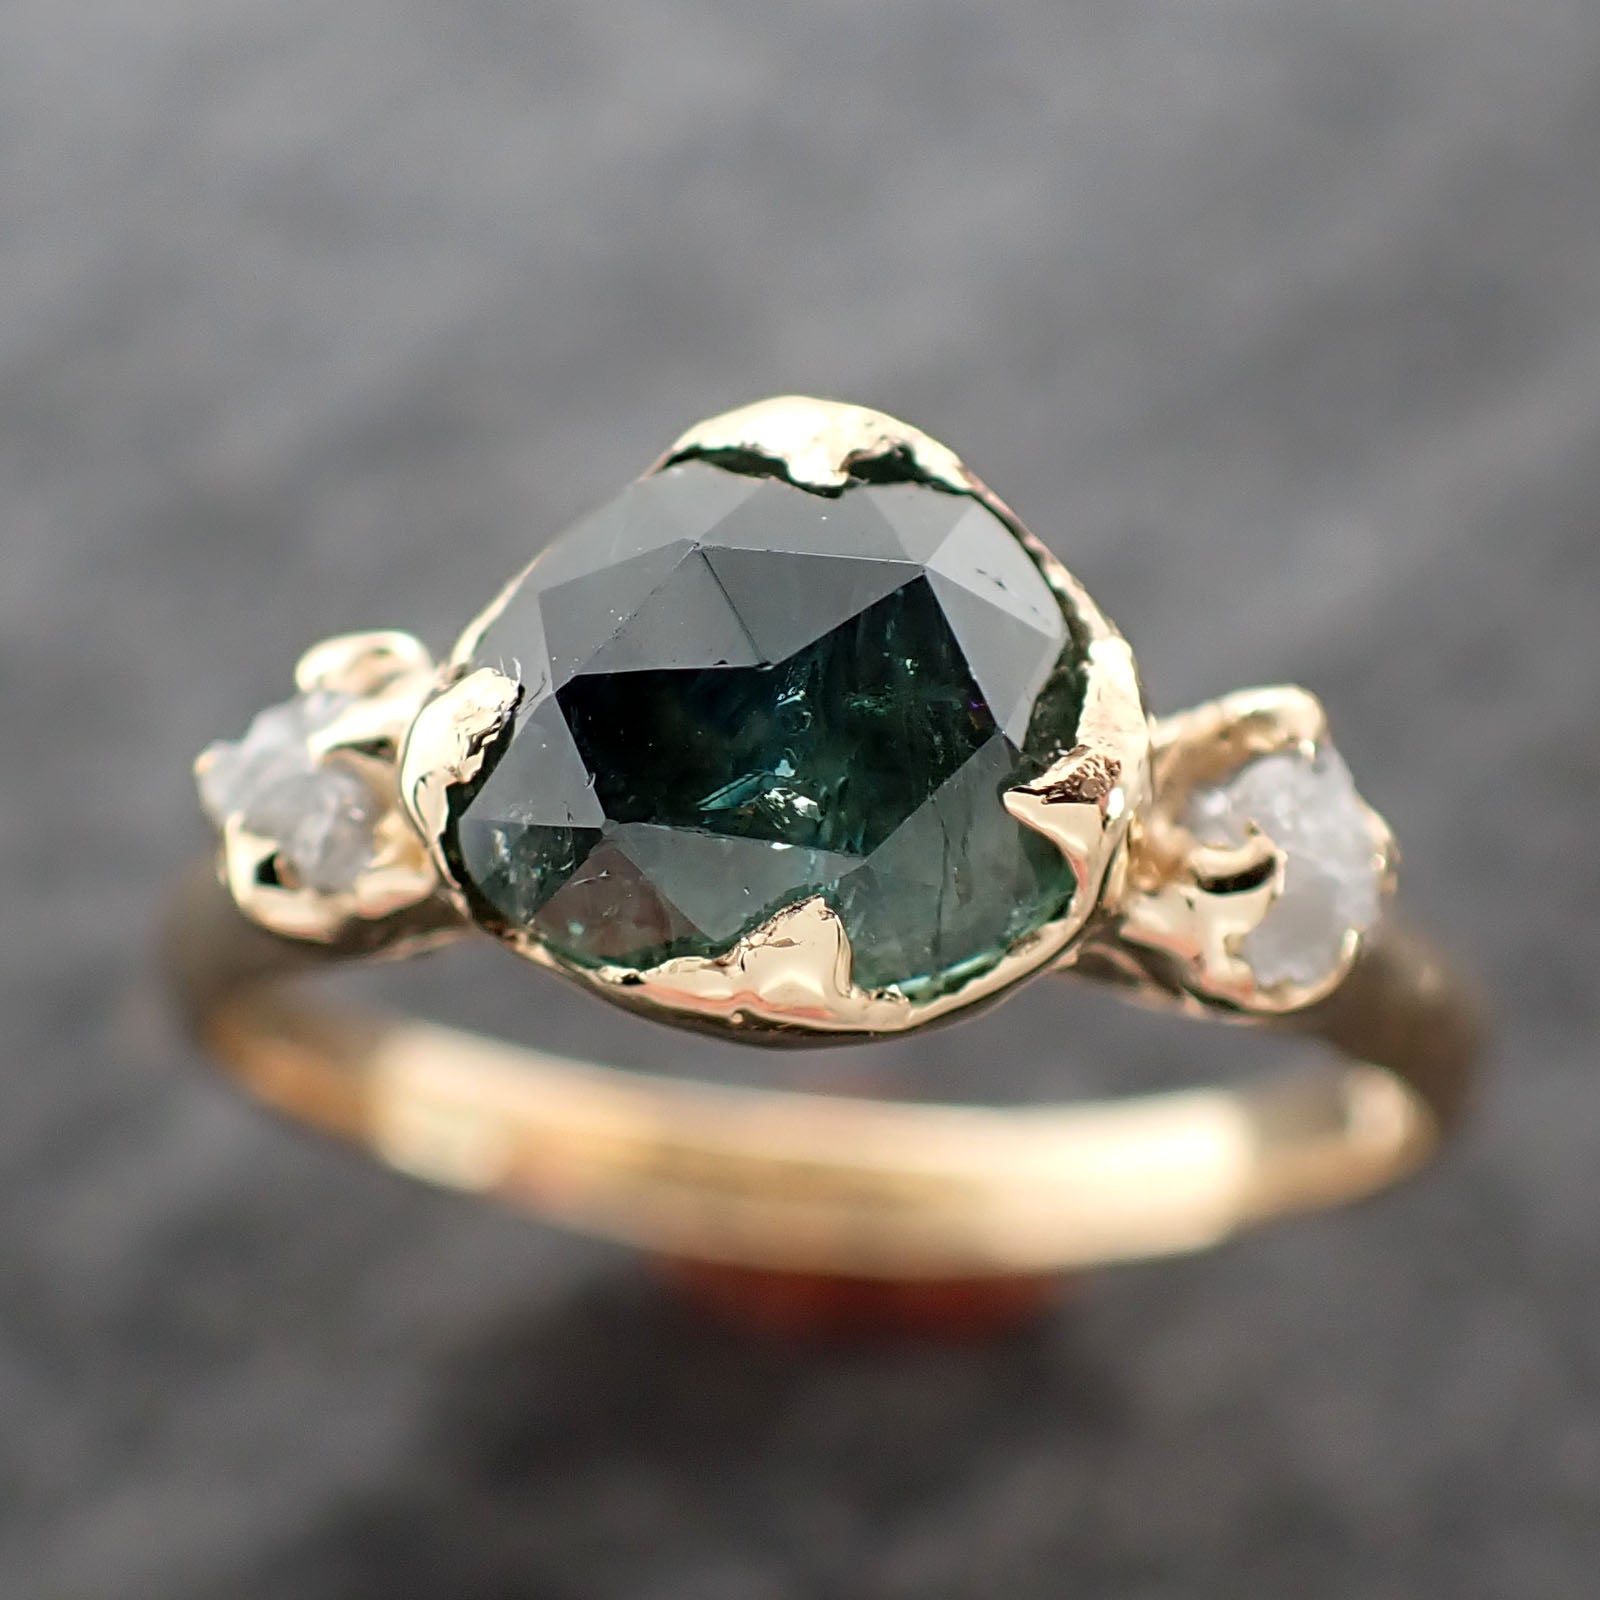 Fancy cut Montana green Sapphire rough Diamond 18k yellow Gold Engagement Ring Wedding Ring Gemstone Ring Multi stone Ring 2641